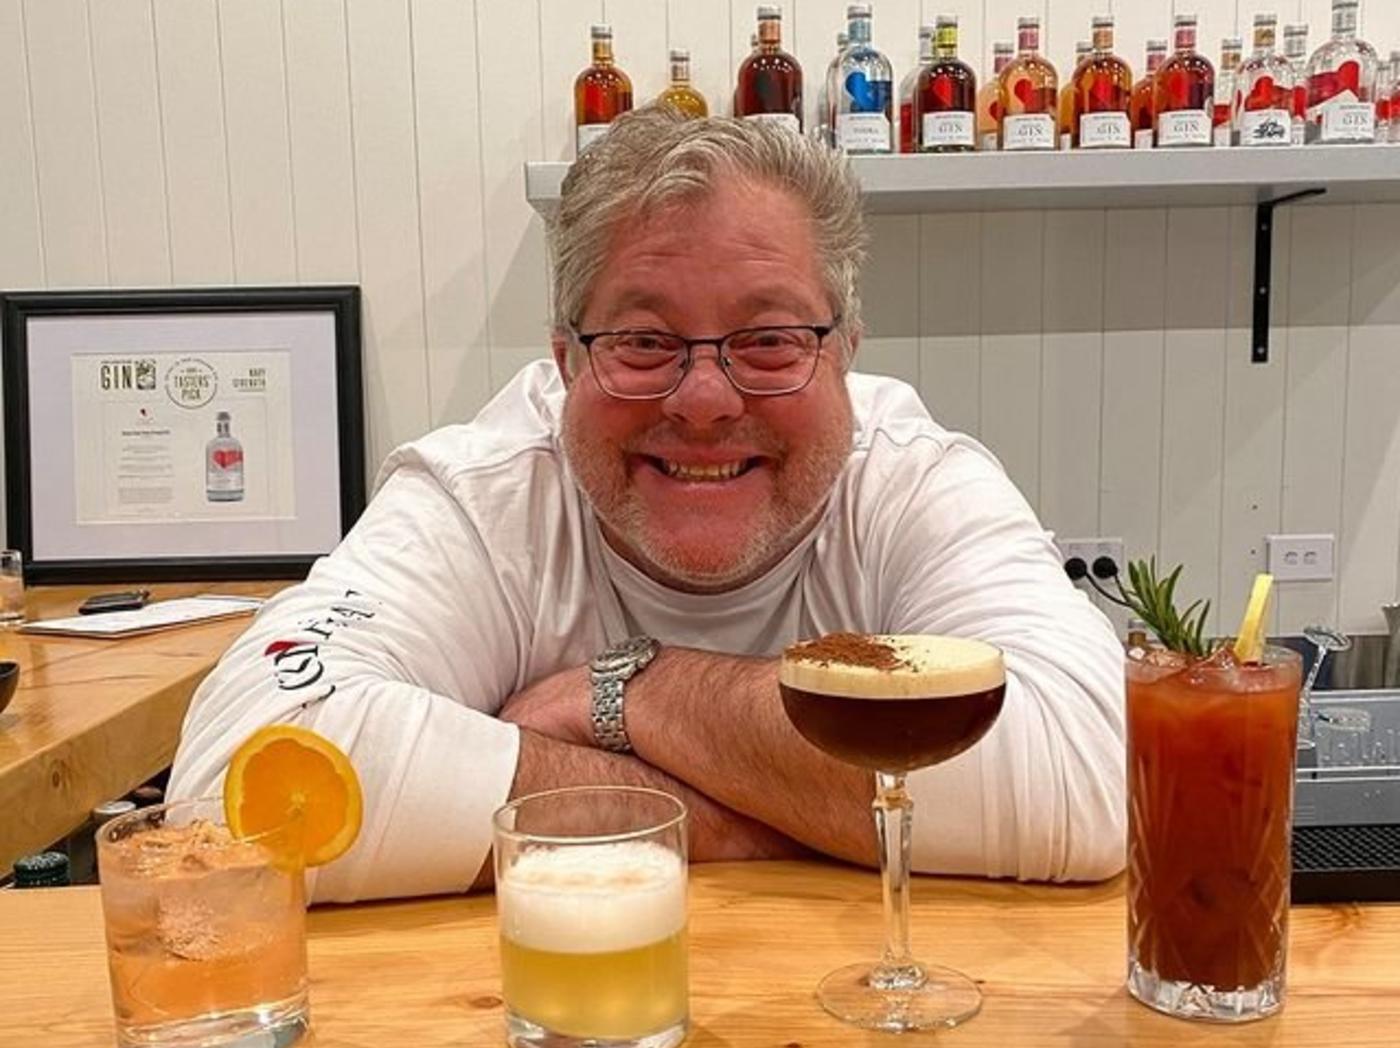 Joerg Henkenhaf, owner and distiller of Broken Heart Spirits preparing cocktails